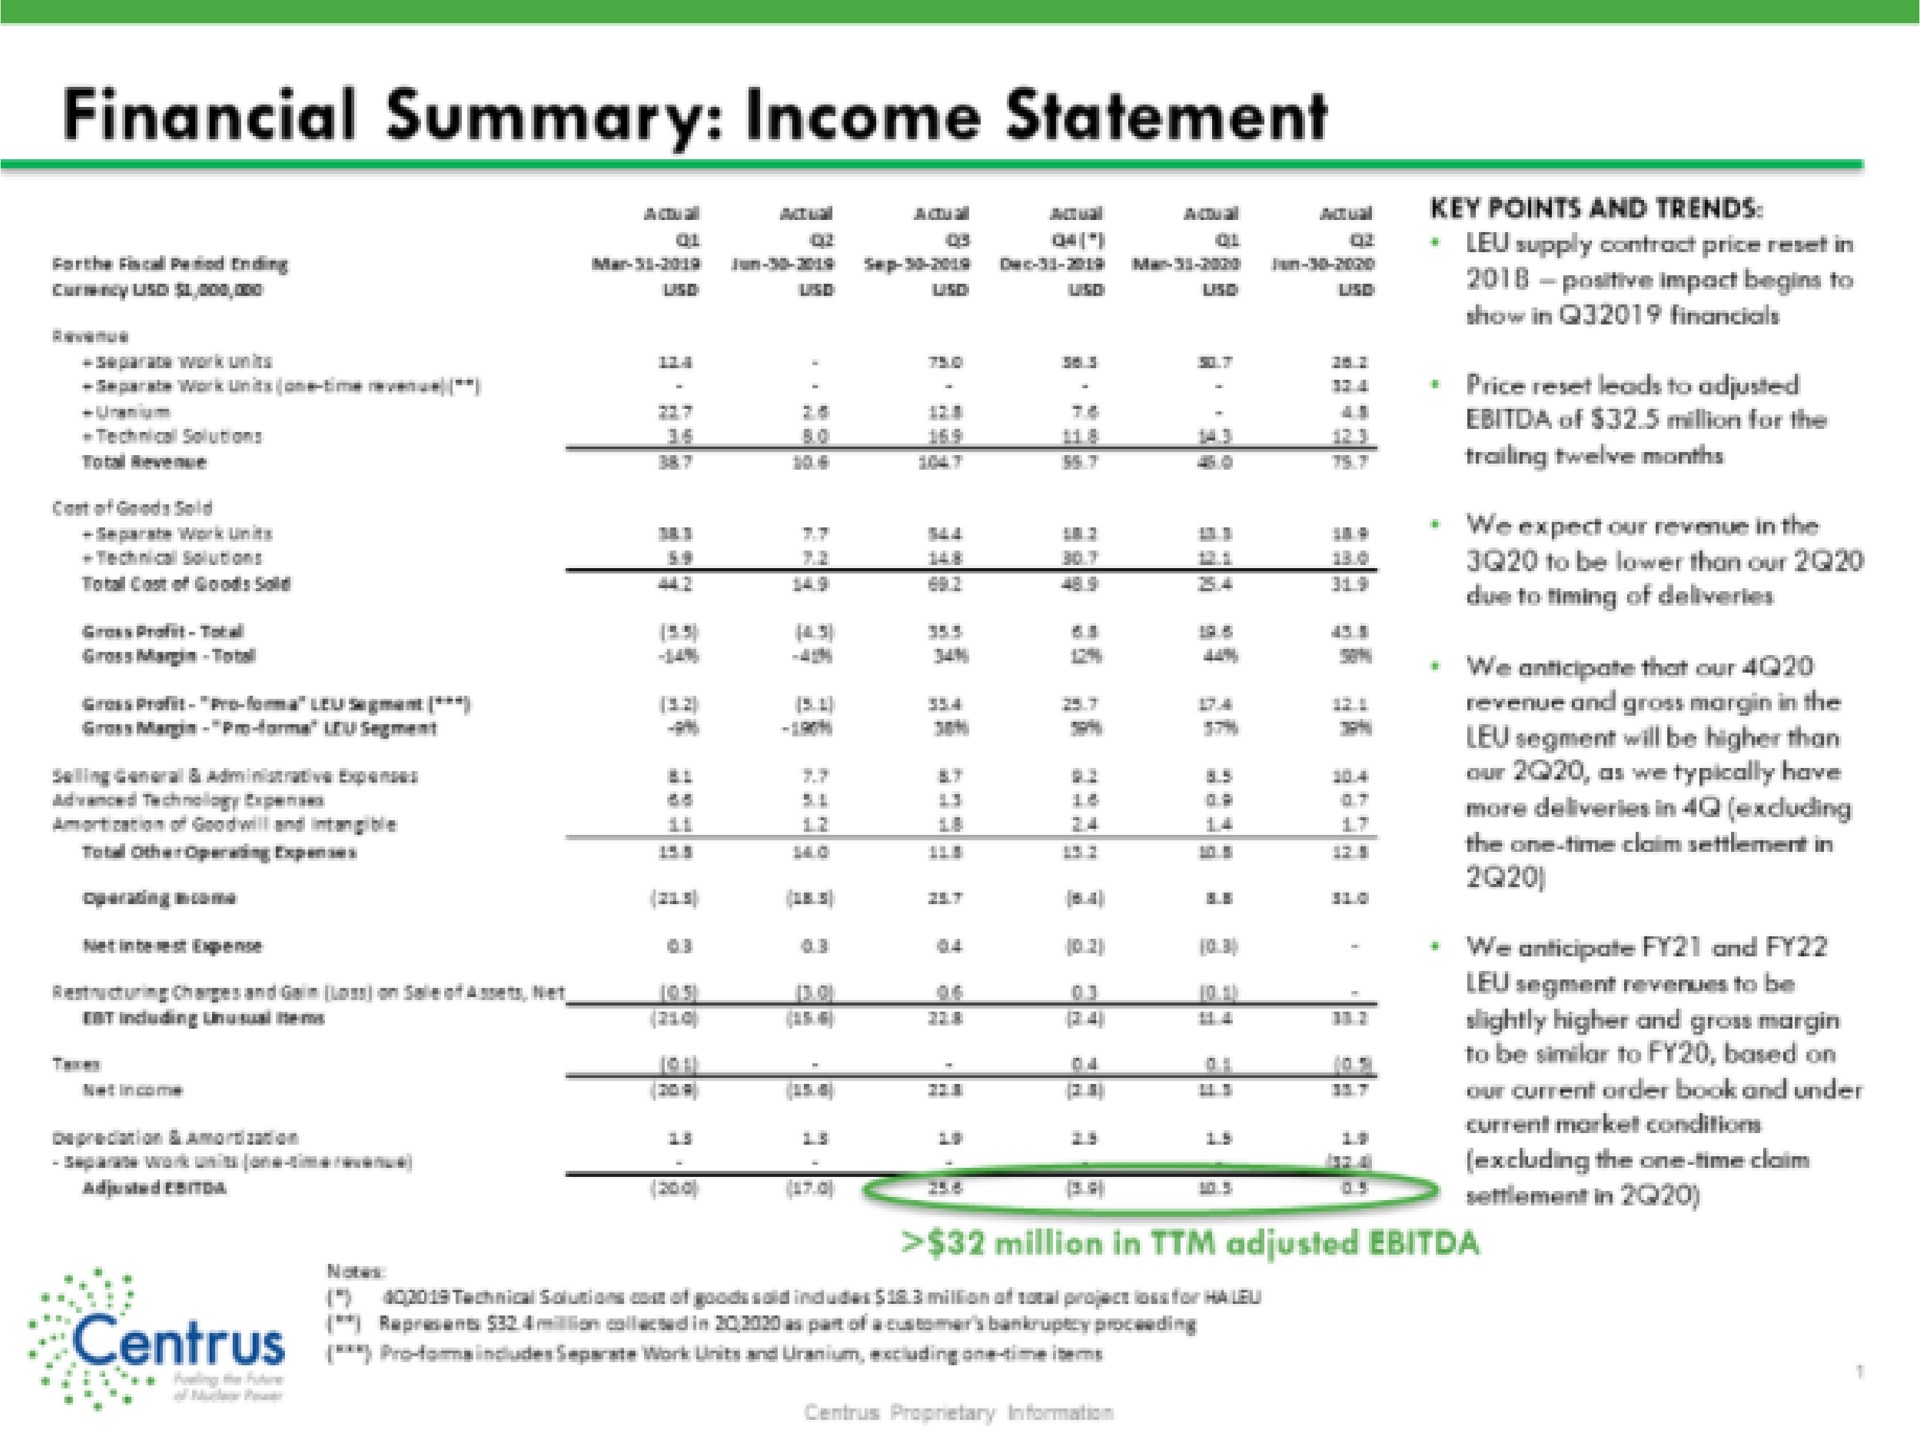 financial summary income statement | Centrus